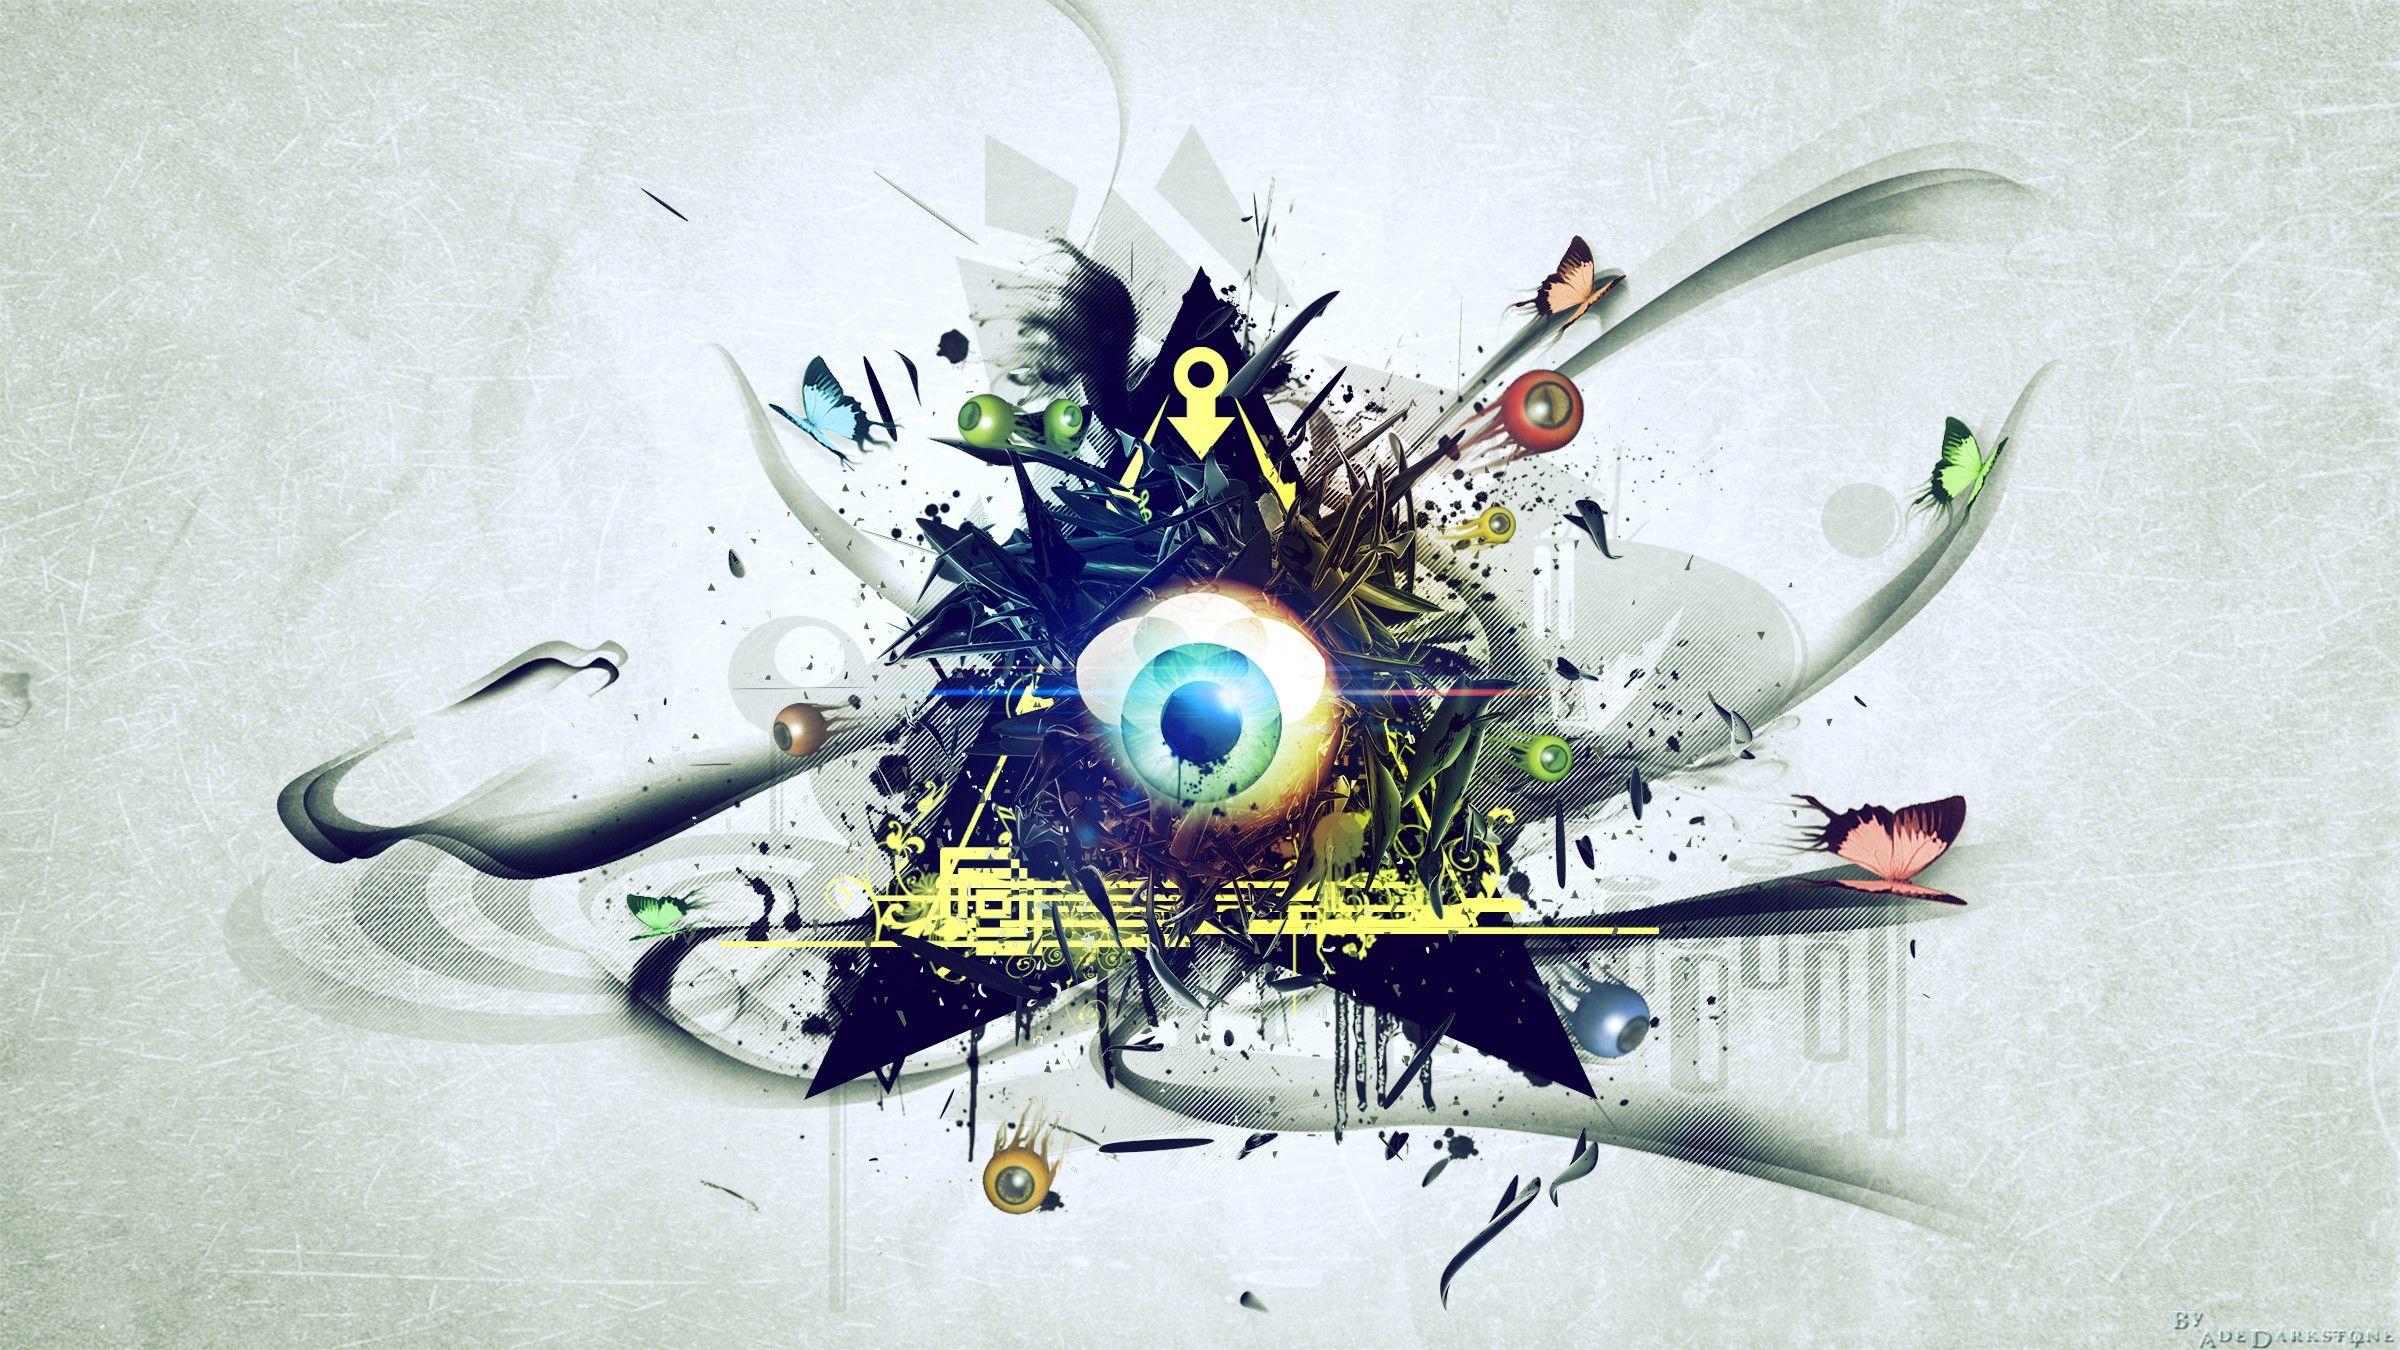 Illuminati, The all seeing eye Wallpaper HD / Desktop and Mobile